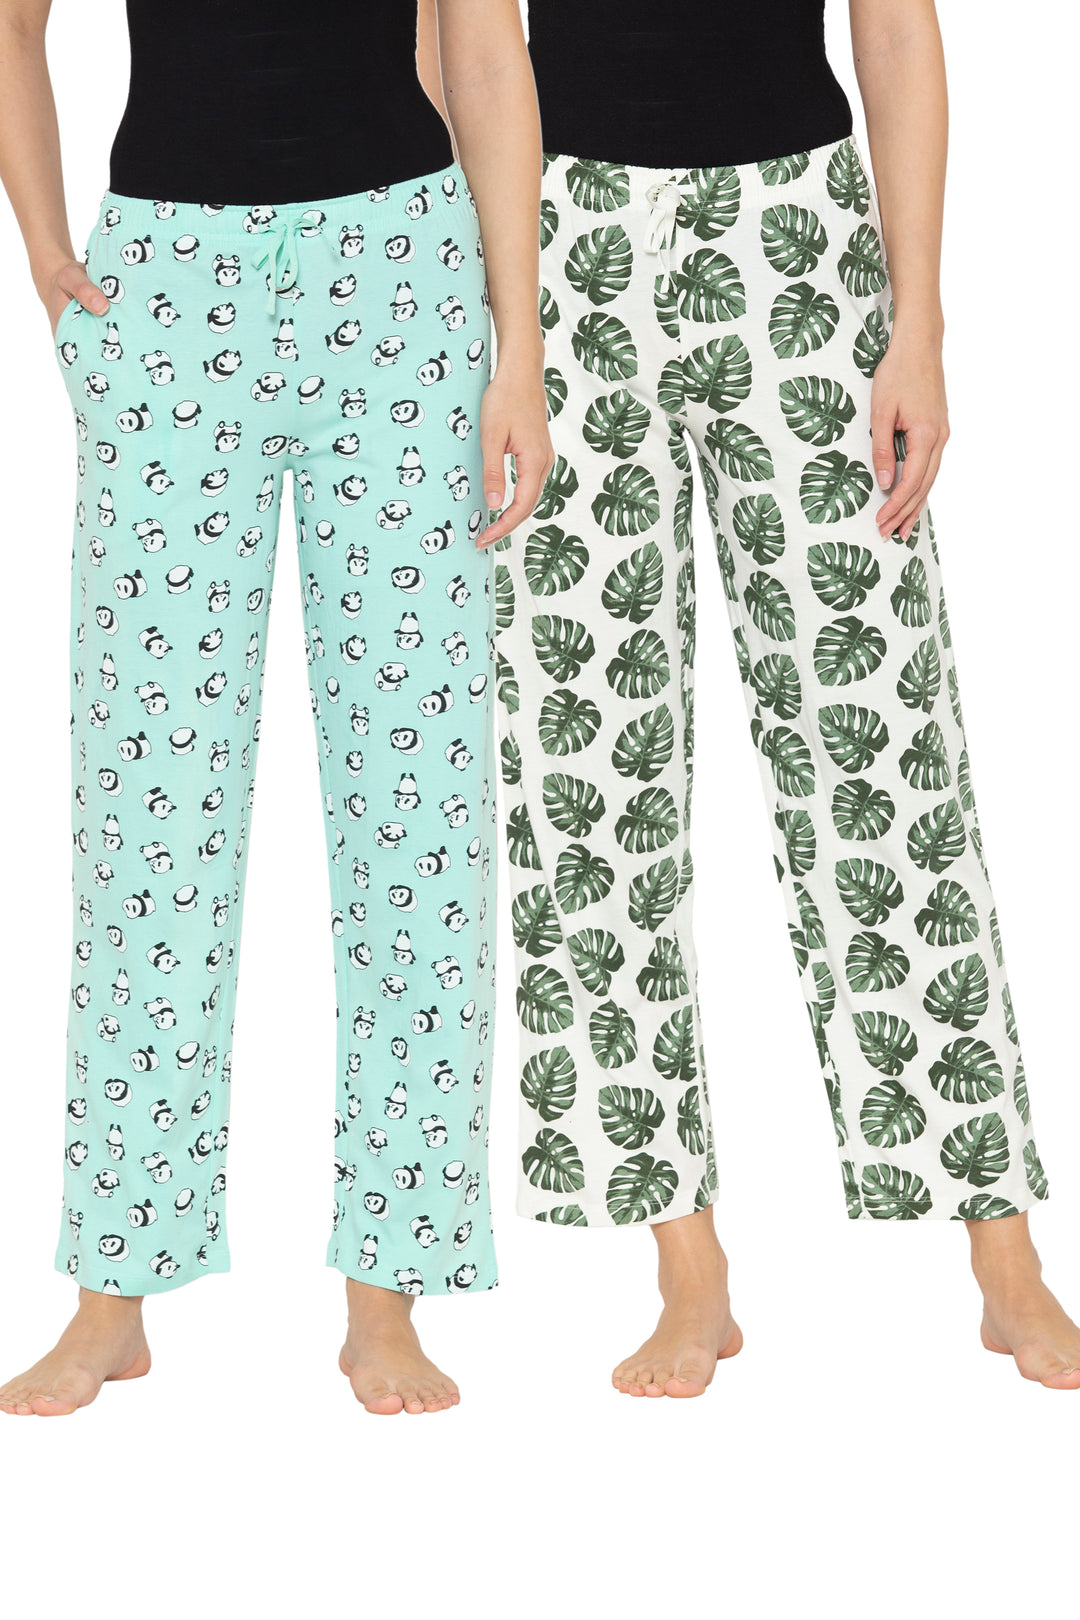 JUNZAN Bubble Tea Pajamas For Women Pants Womens Pyjama Bottoms